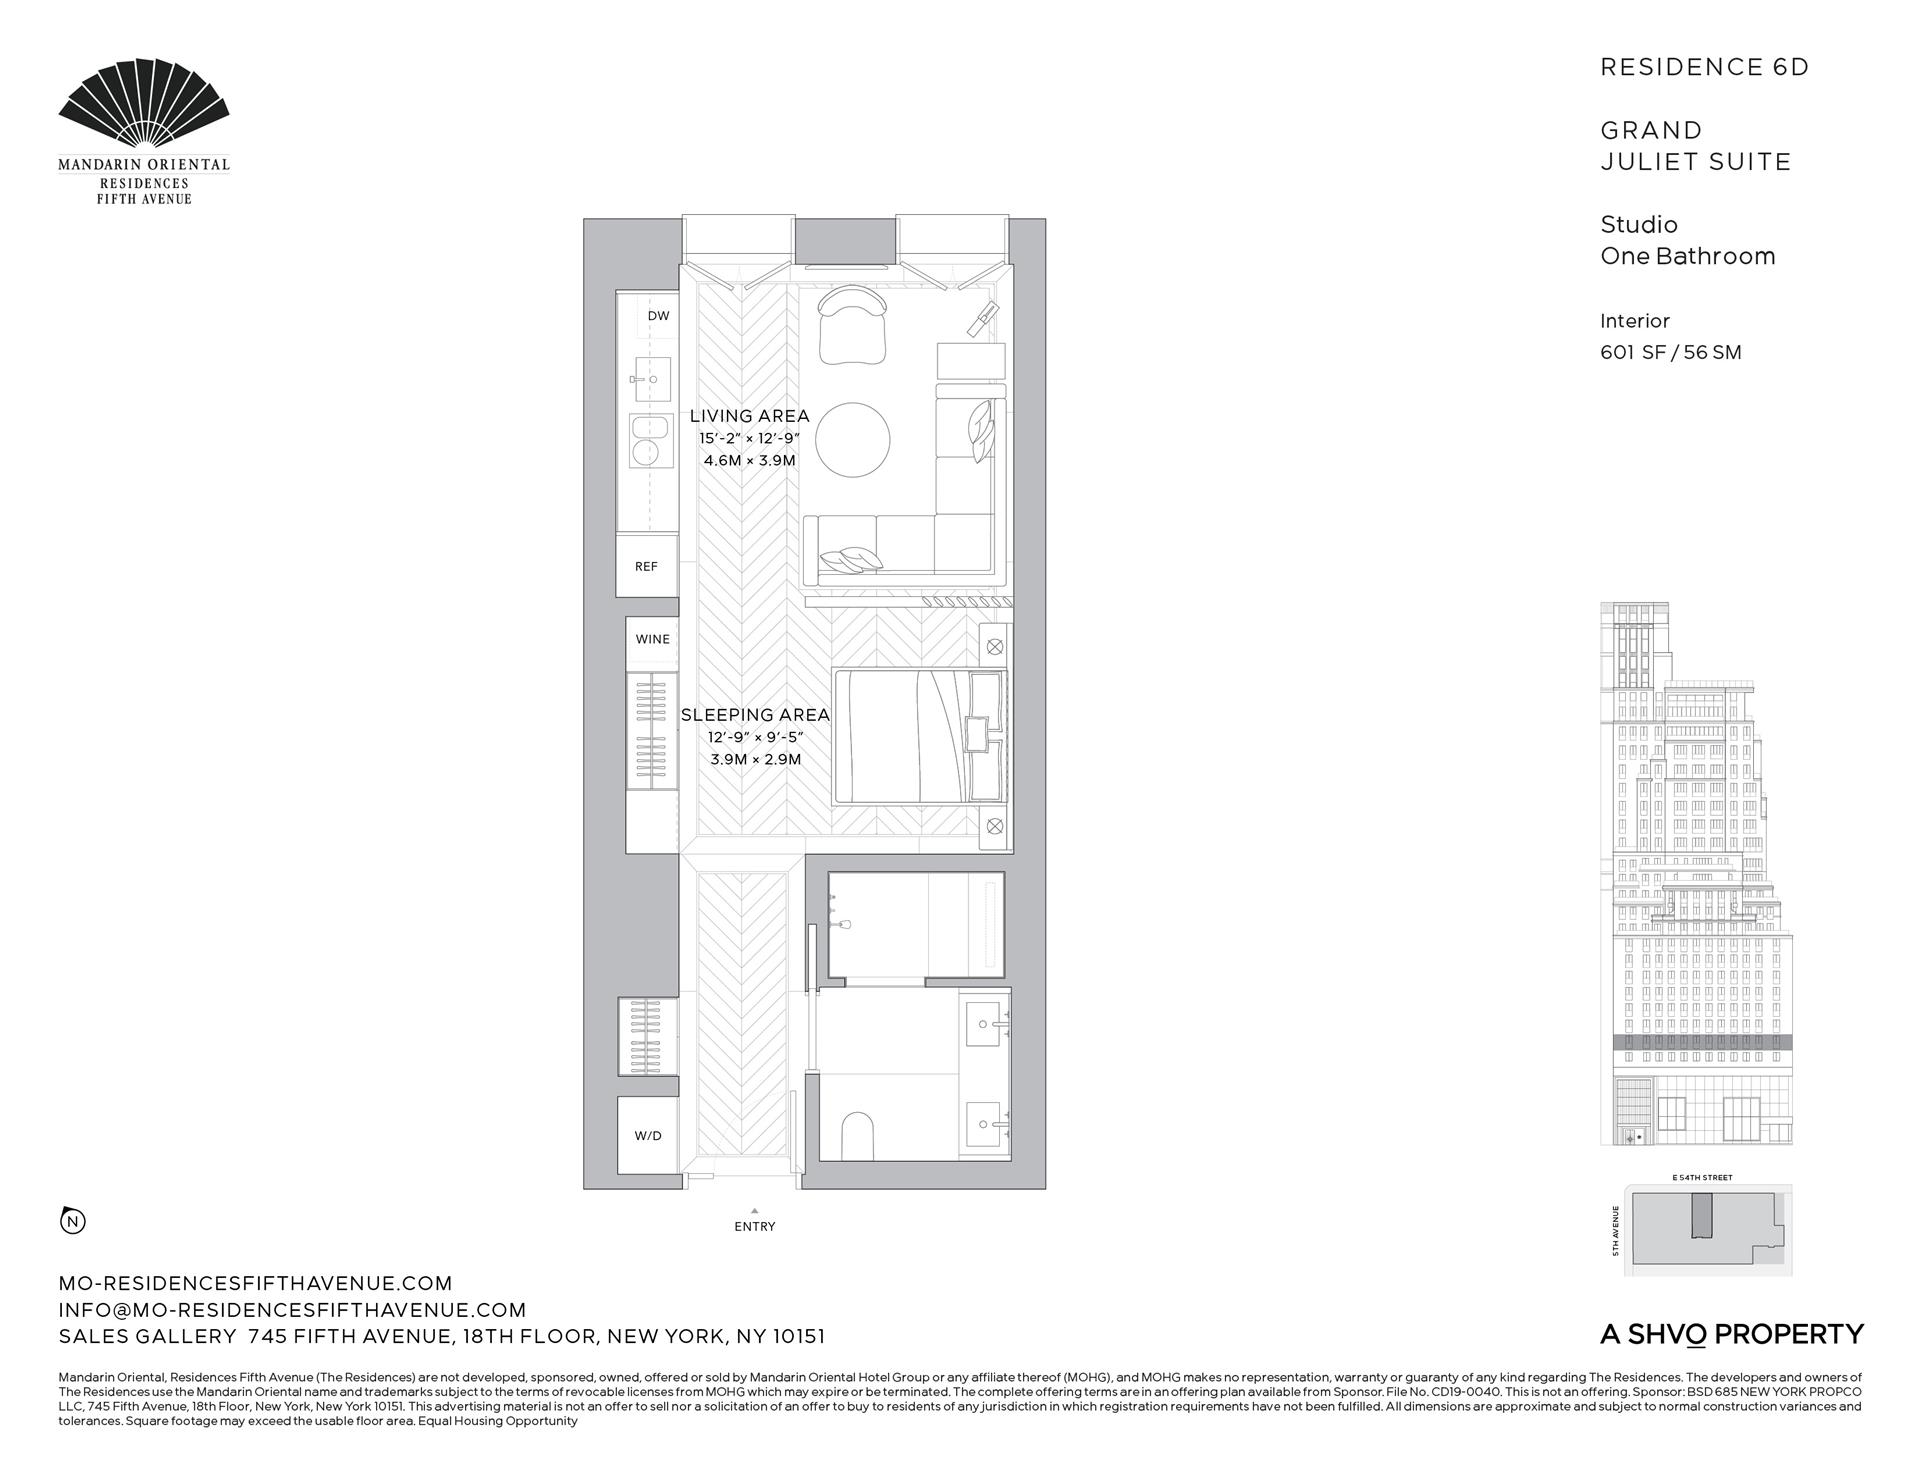 Floorplan for 685 5th Avenue, 6D